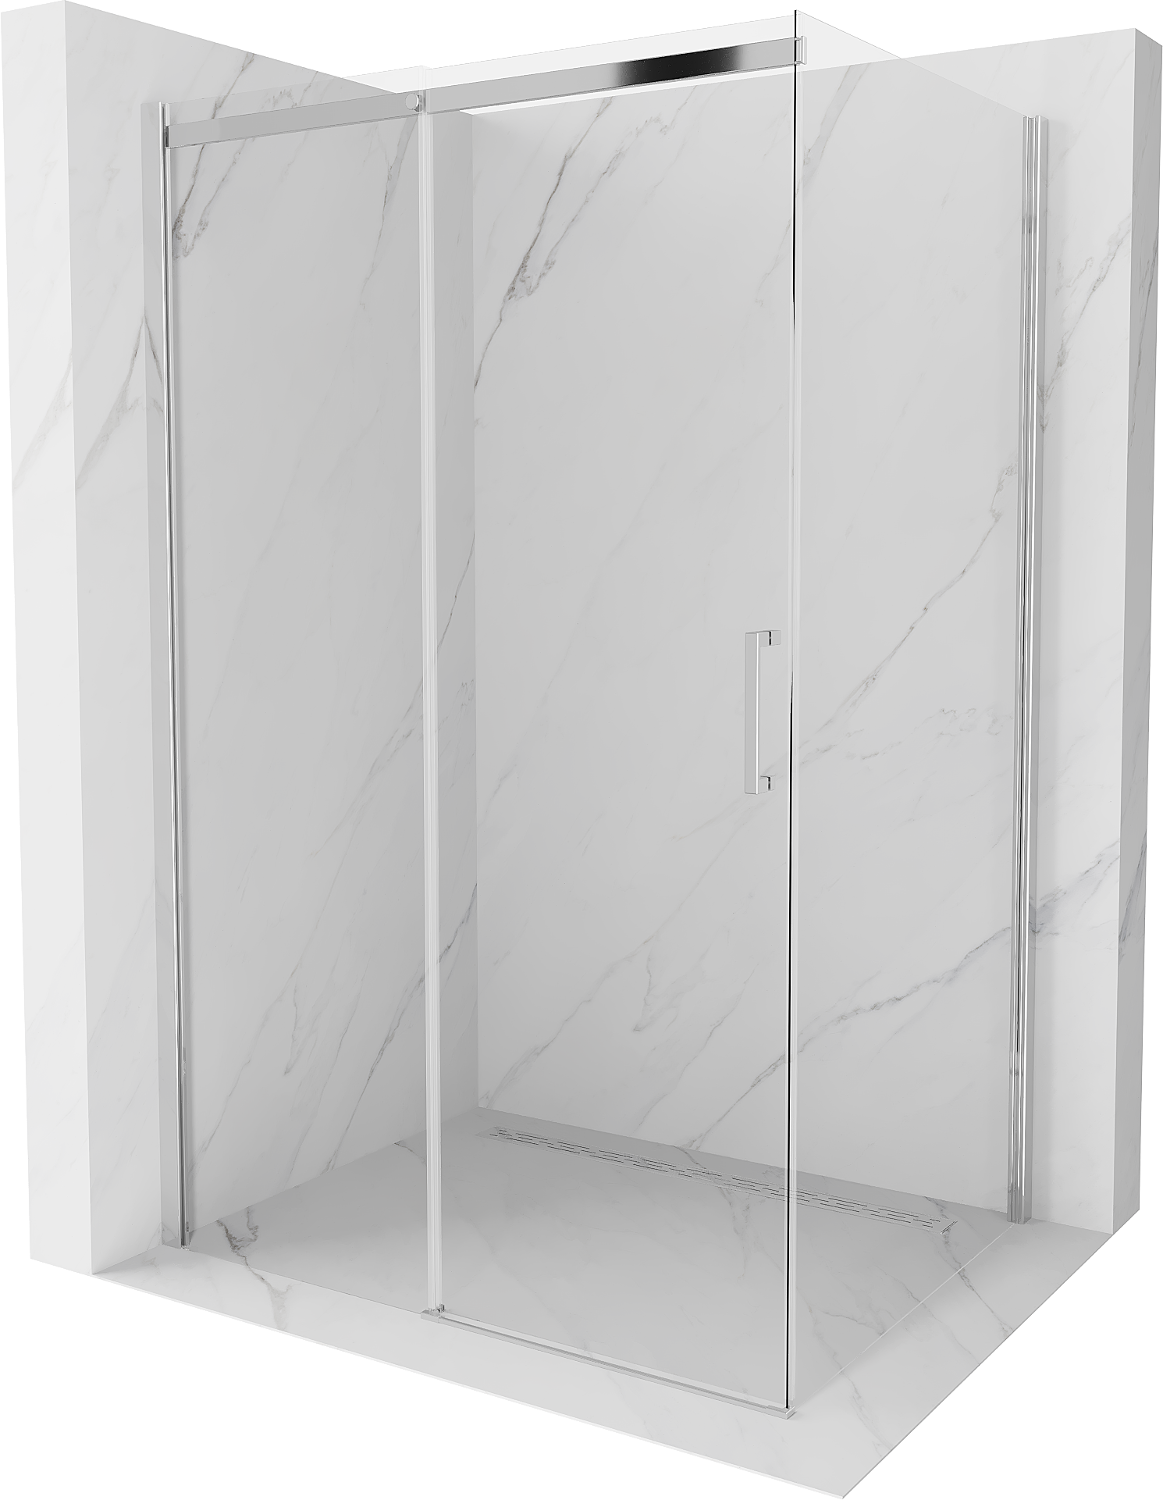 Mexen Omega kabina prysznicowa rozsuwana 120 x 80 cm, transparent, chrom - 825-120-080-01-00